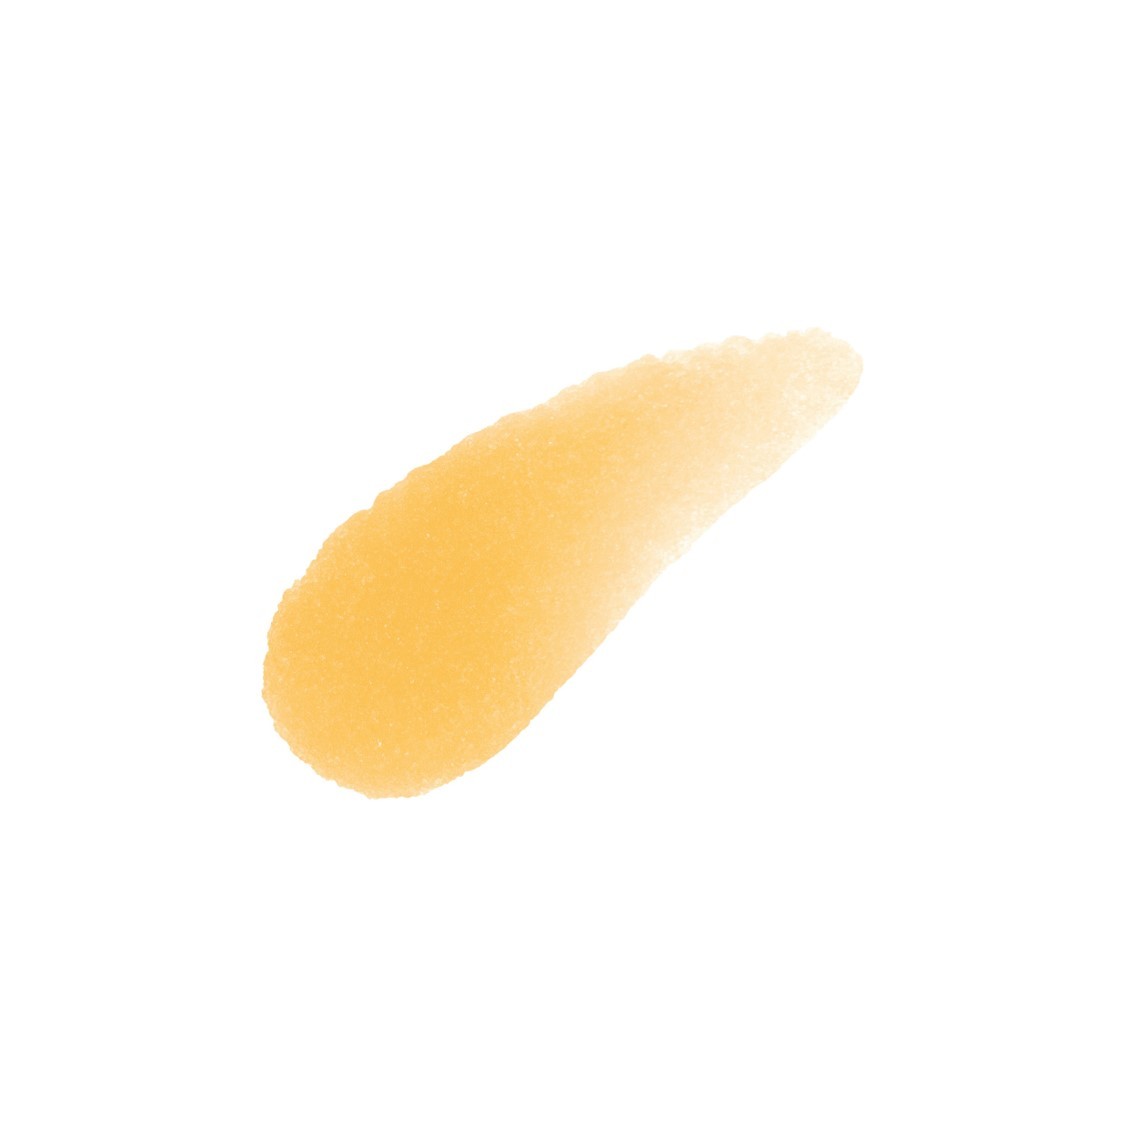 Jeffree Star Cosmetics - Velour Lip Scrub -  Orange